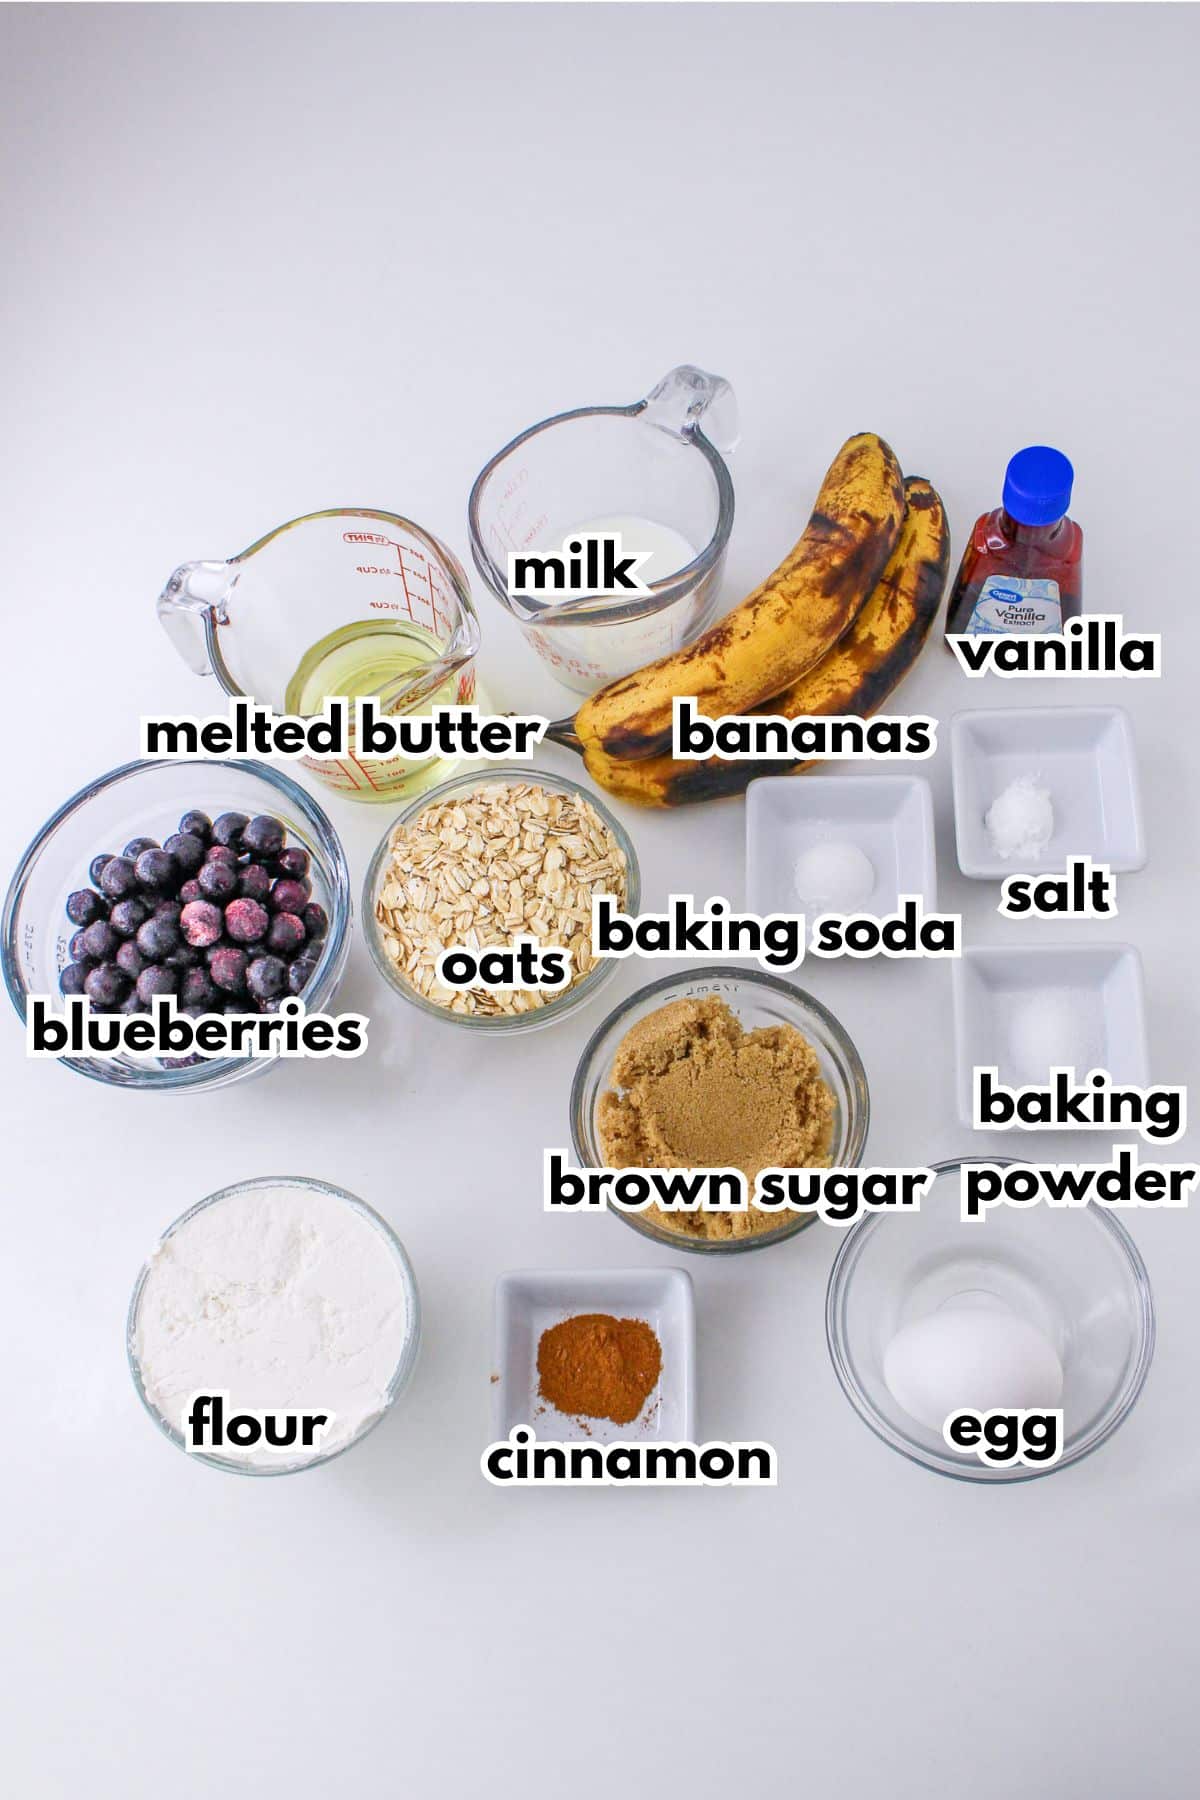 bowls of melted butter, milk, blueberries, oats, flour, cinnamon, brown sugar, baking soda, baking powder, salt, bananas and an egg.